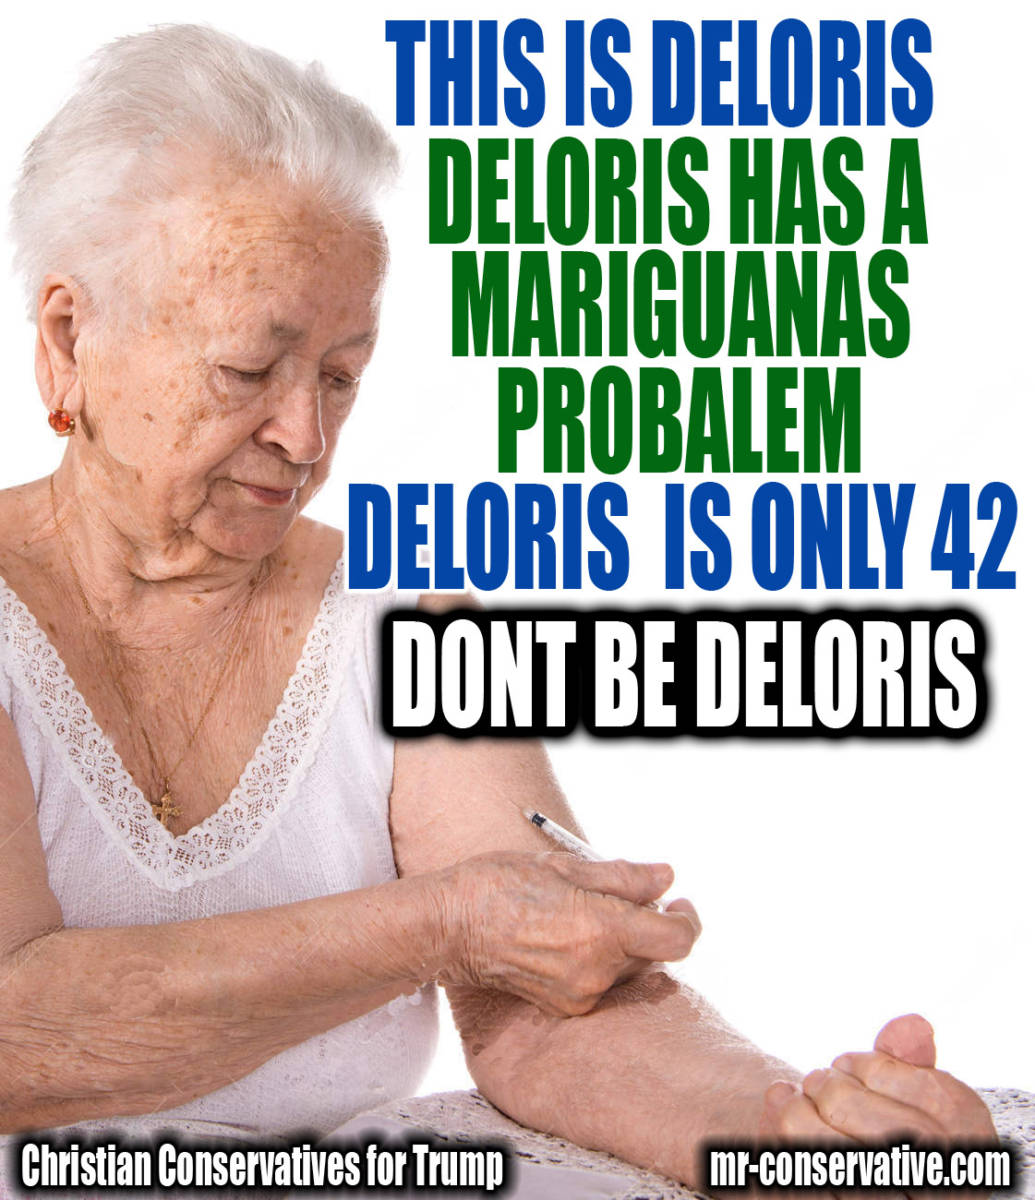 Marijuana is dangerous should not be legalized!